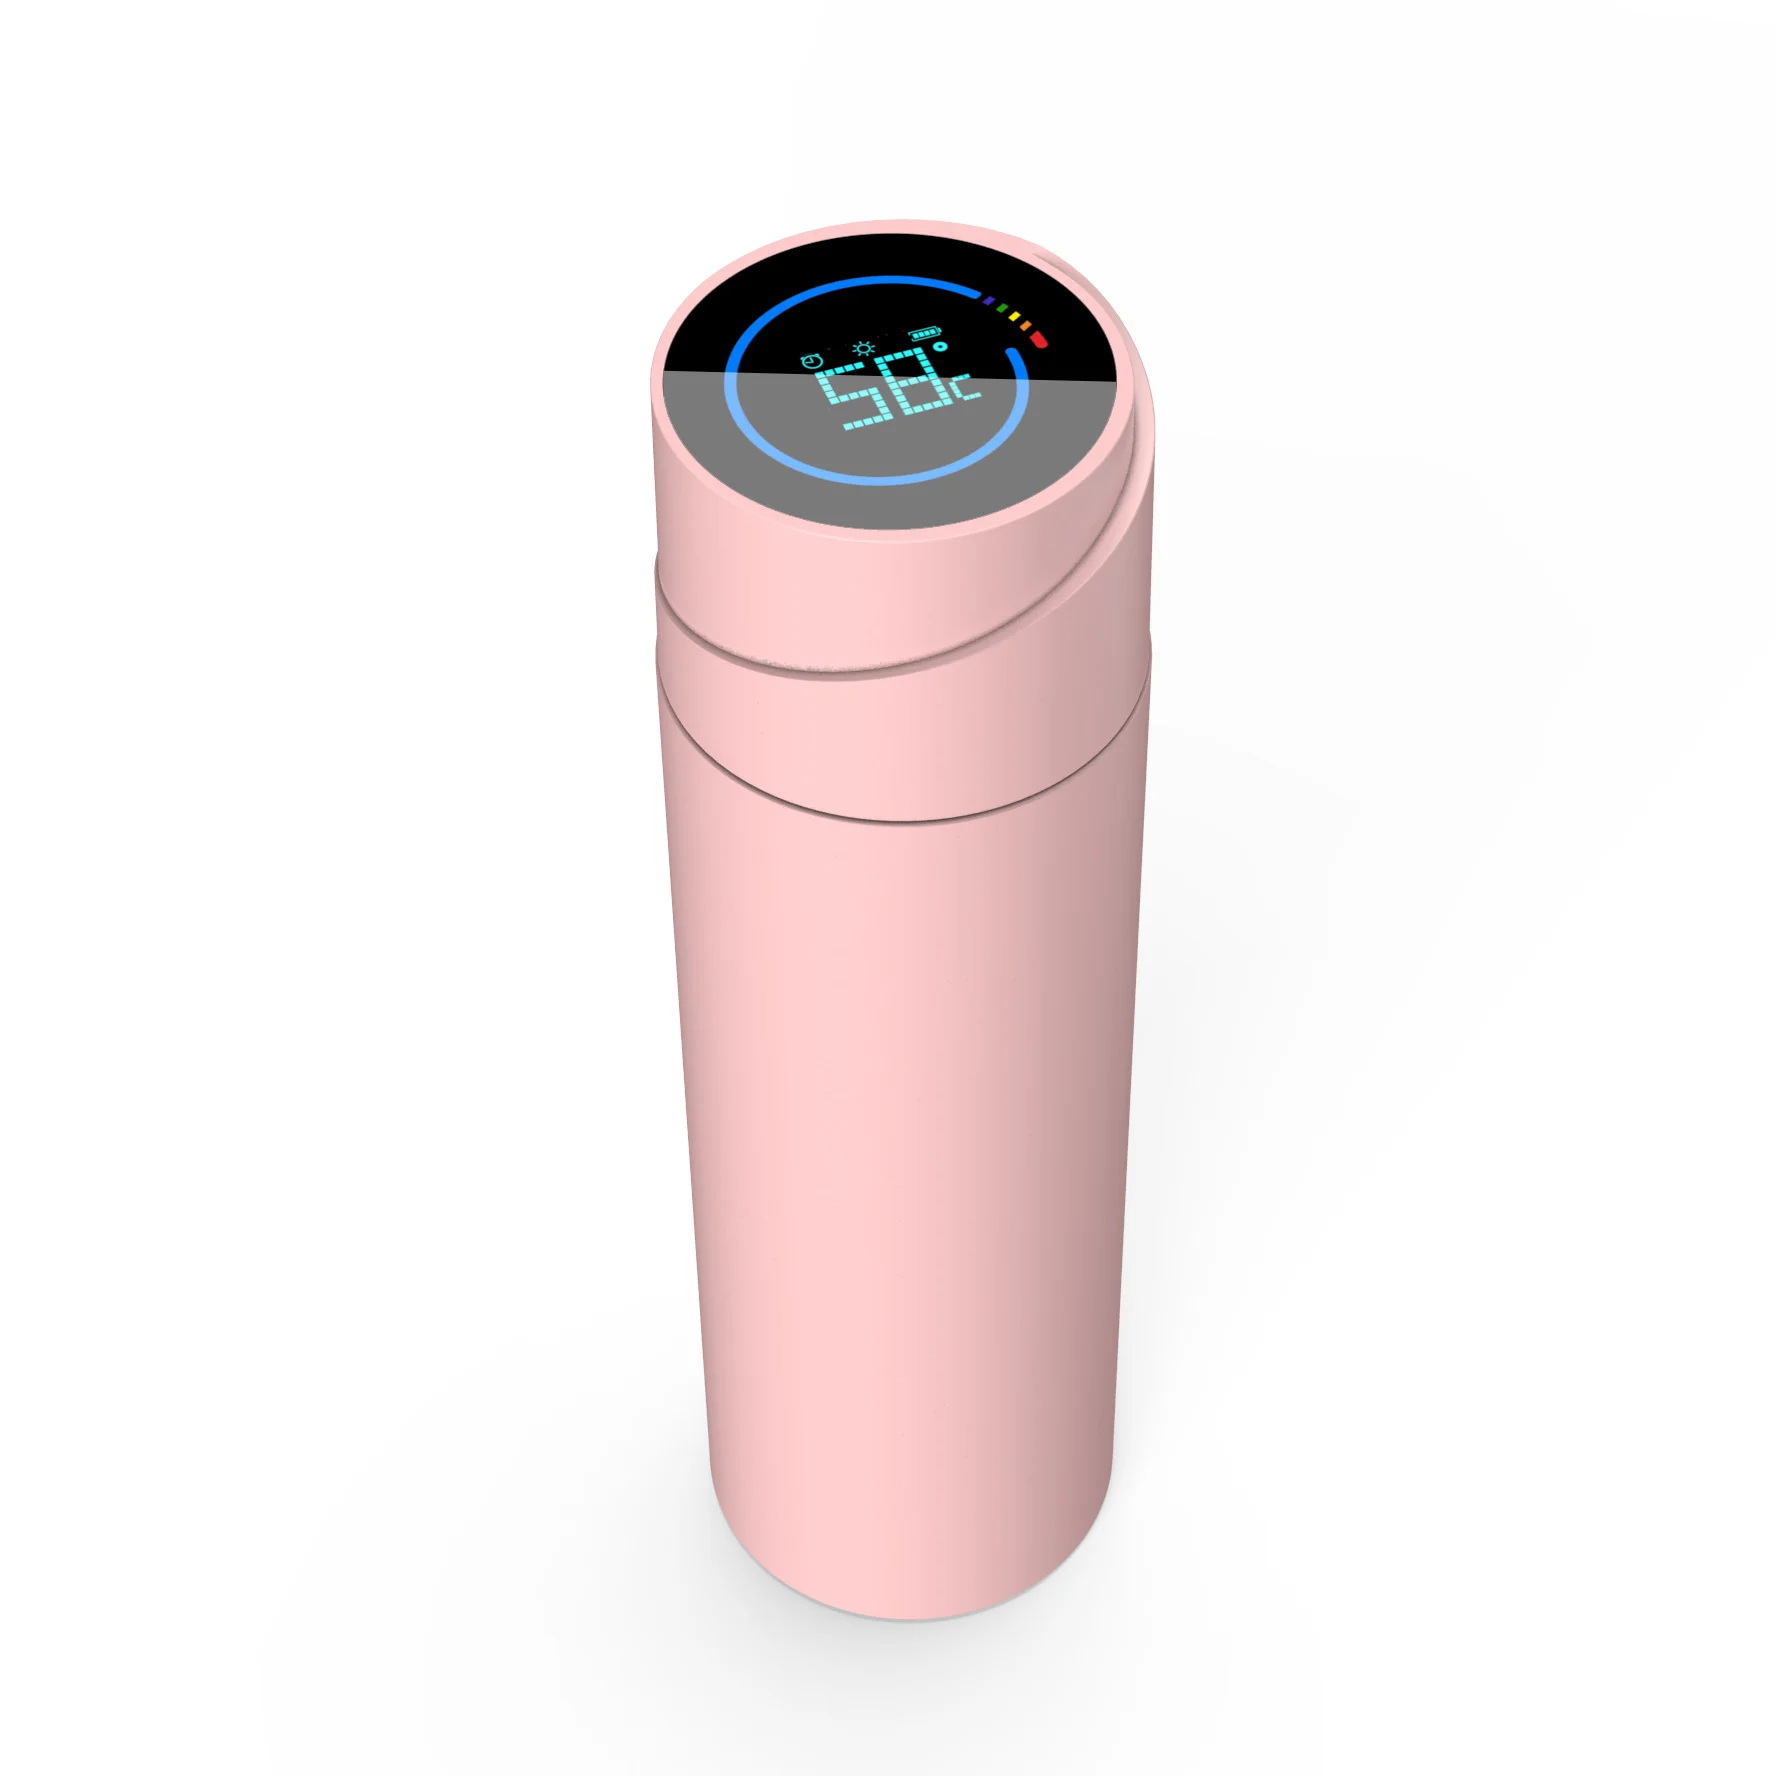 

2021 Pengwing Hot Selling Amazon Cool Design 450Ml Smart Reminder Vacuum Intelligent Water Bottle, Pink white black